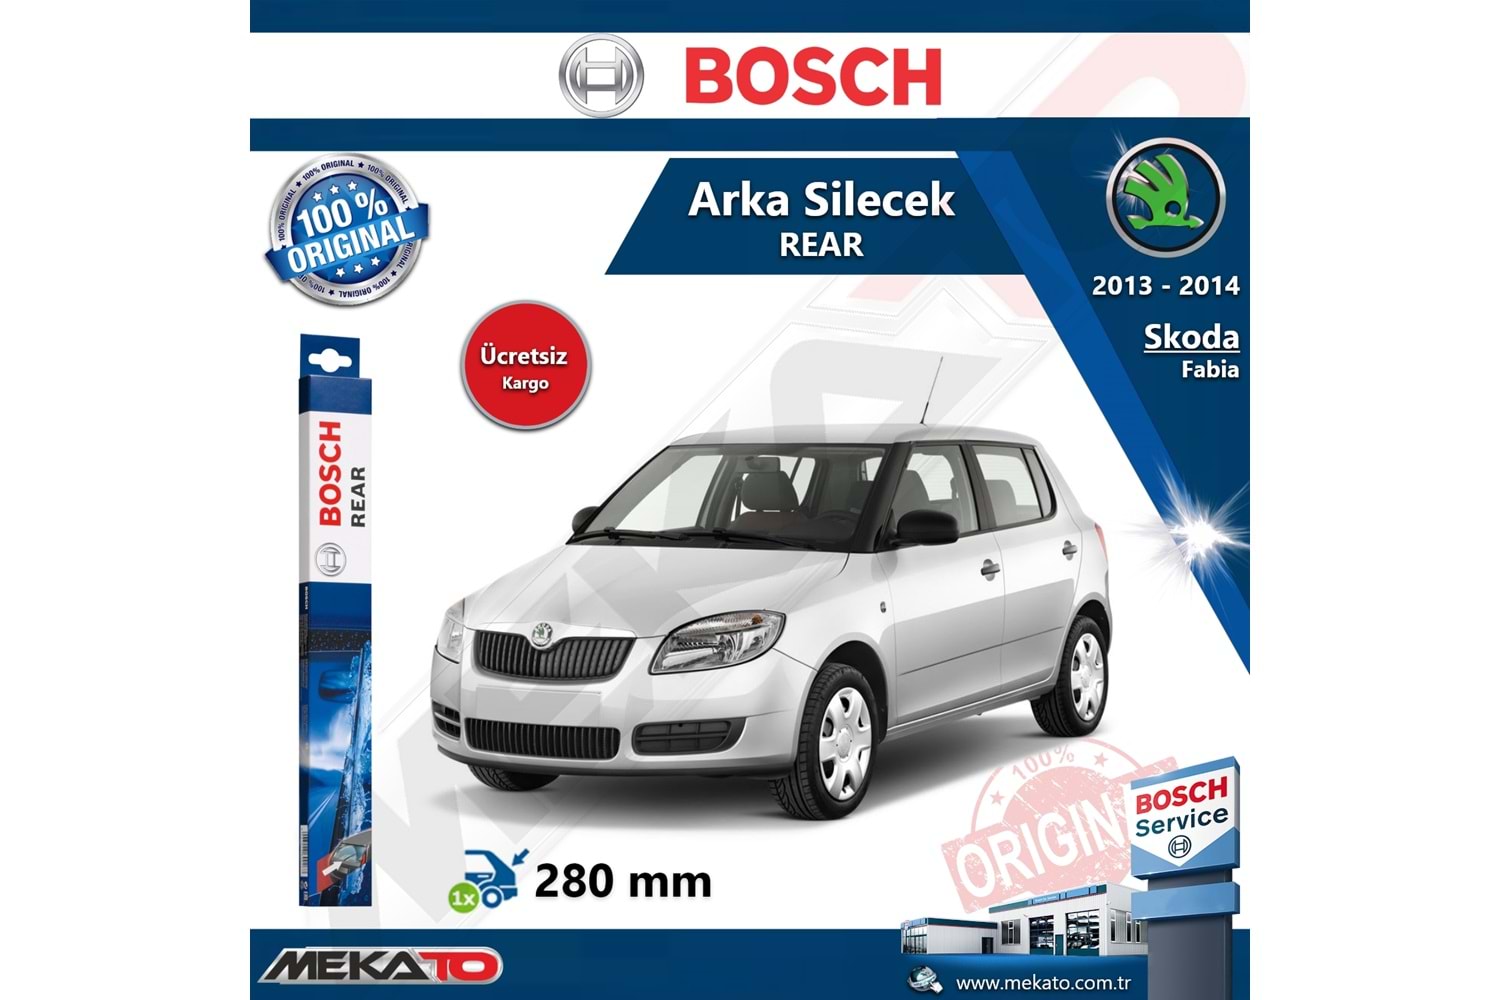 Skoda Fabia Arka Silecek Bosch Rear 2013-2014